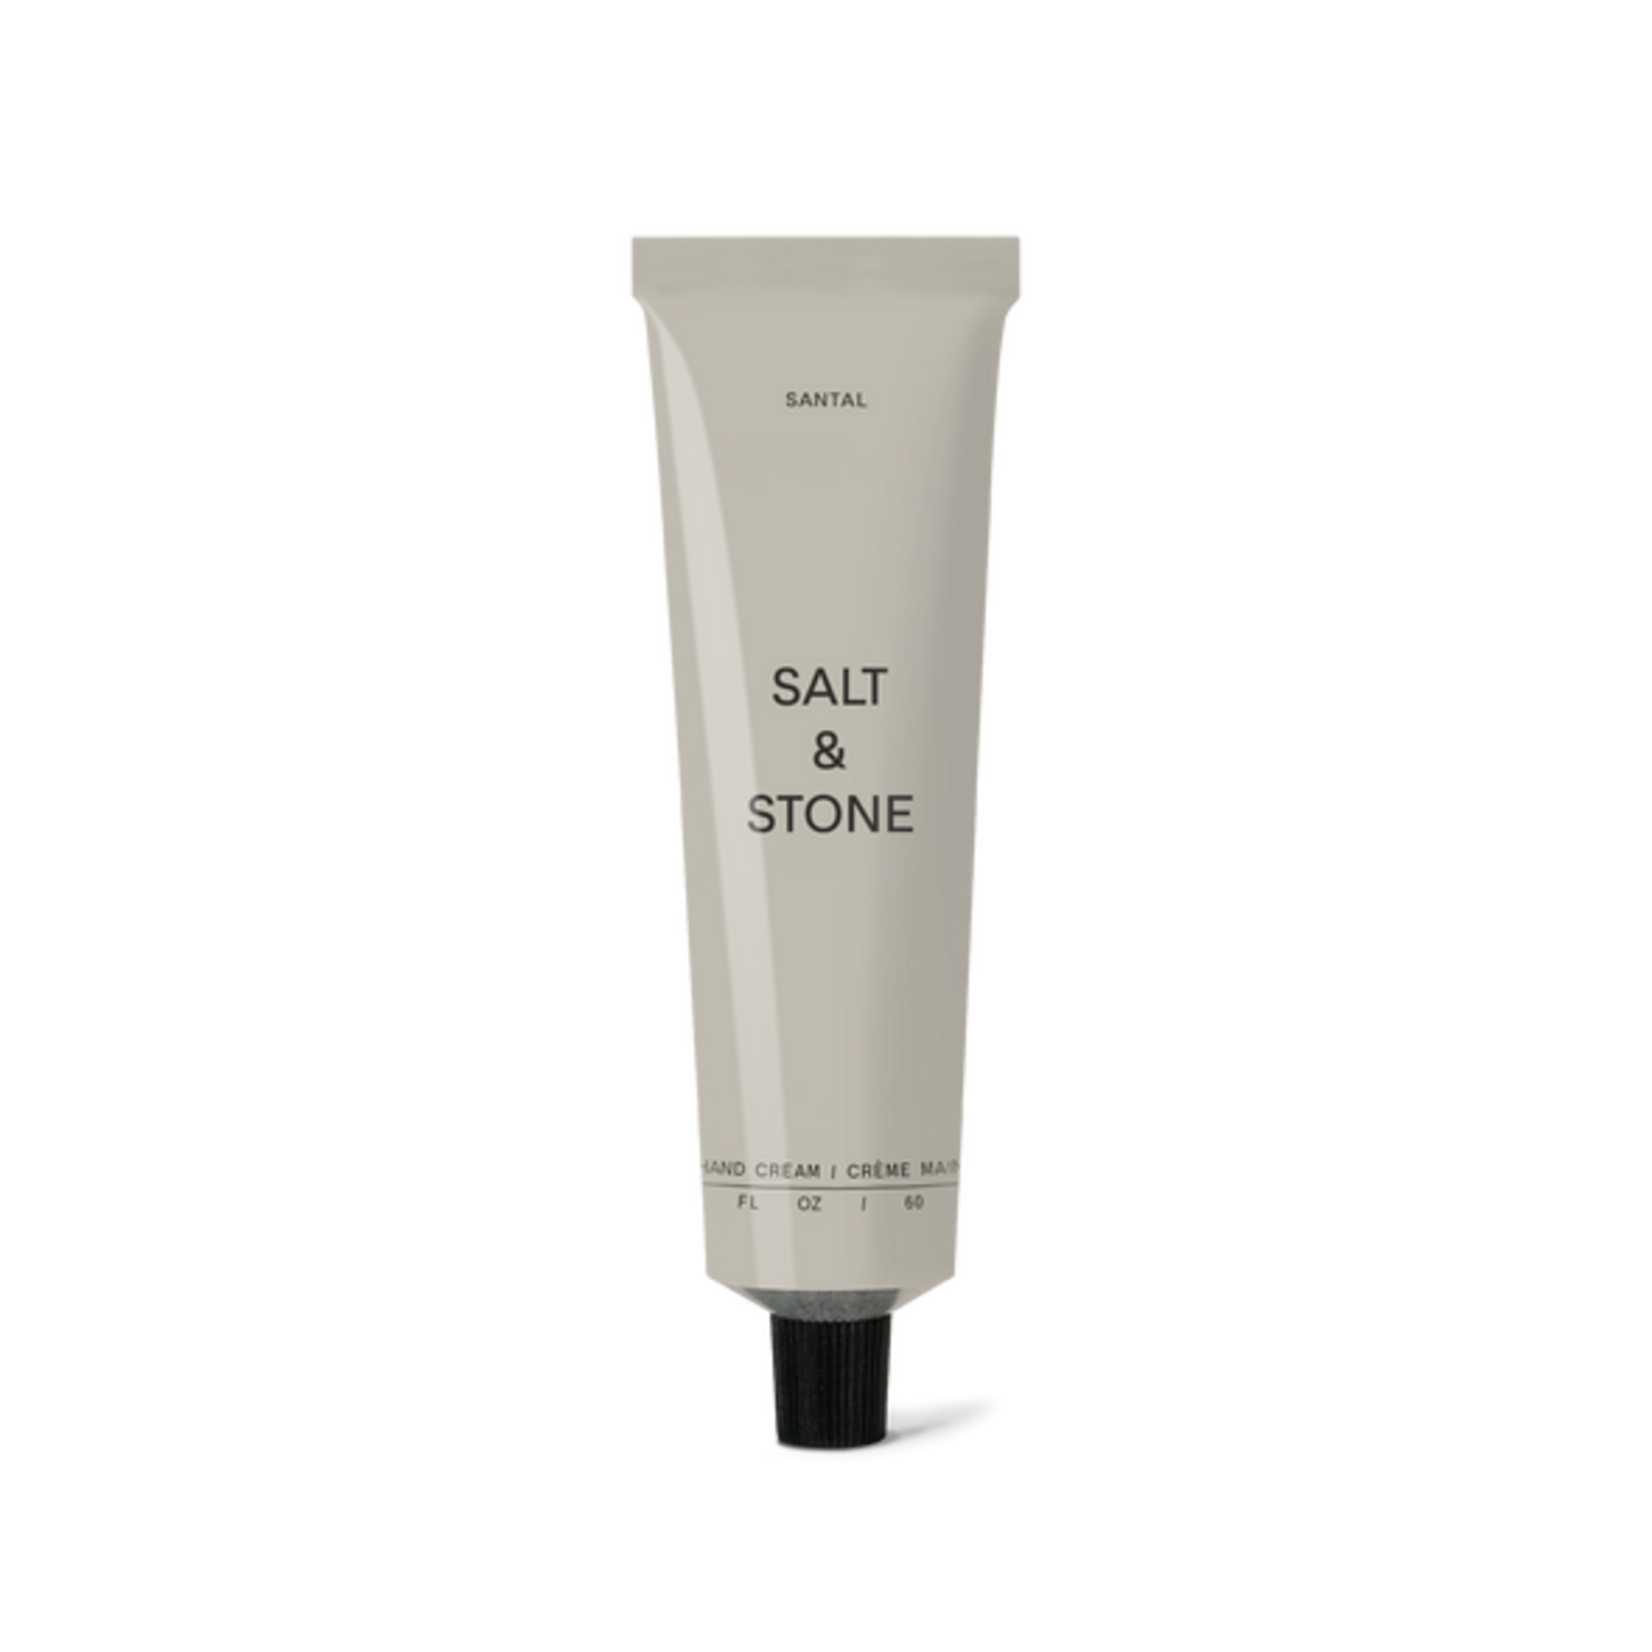 SALT & STONE HAND CREAM SANTAL - SALT & STONE